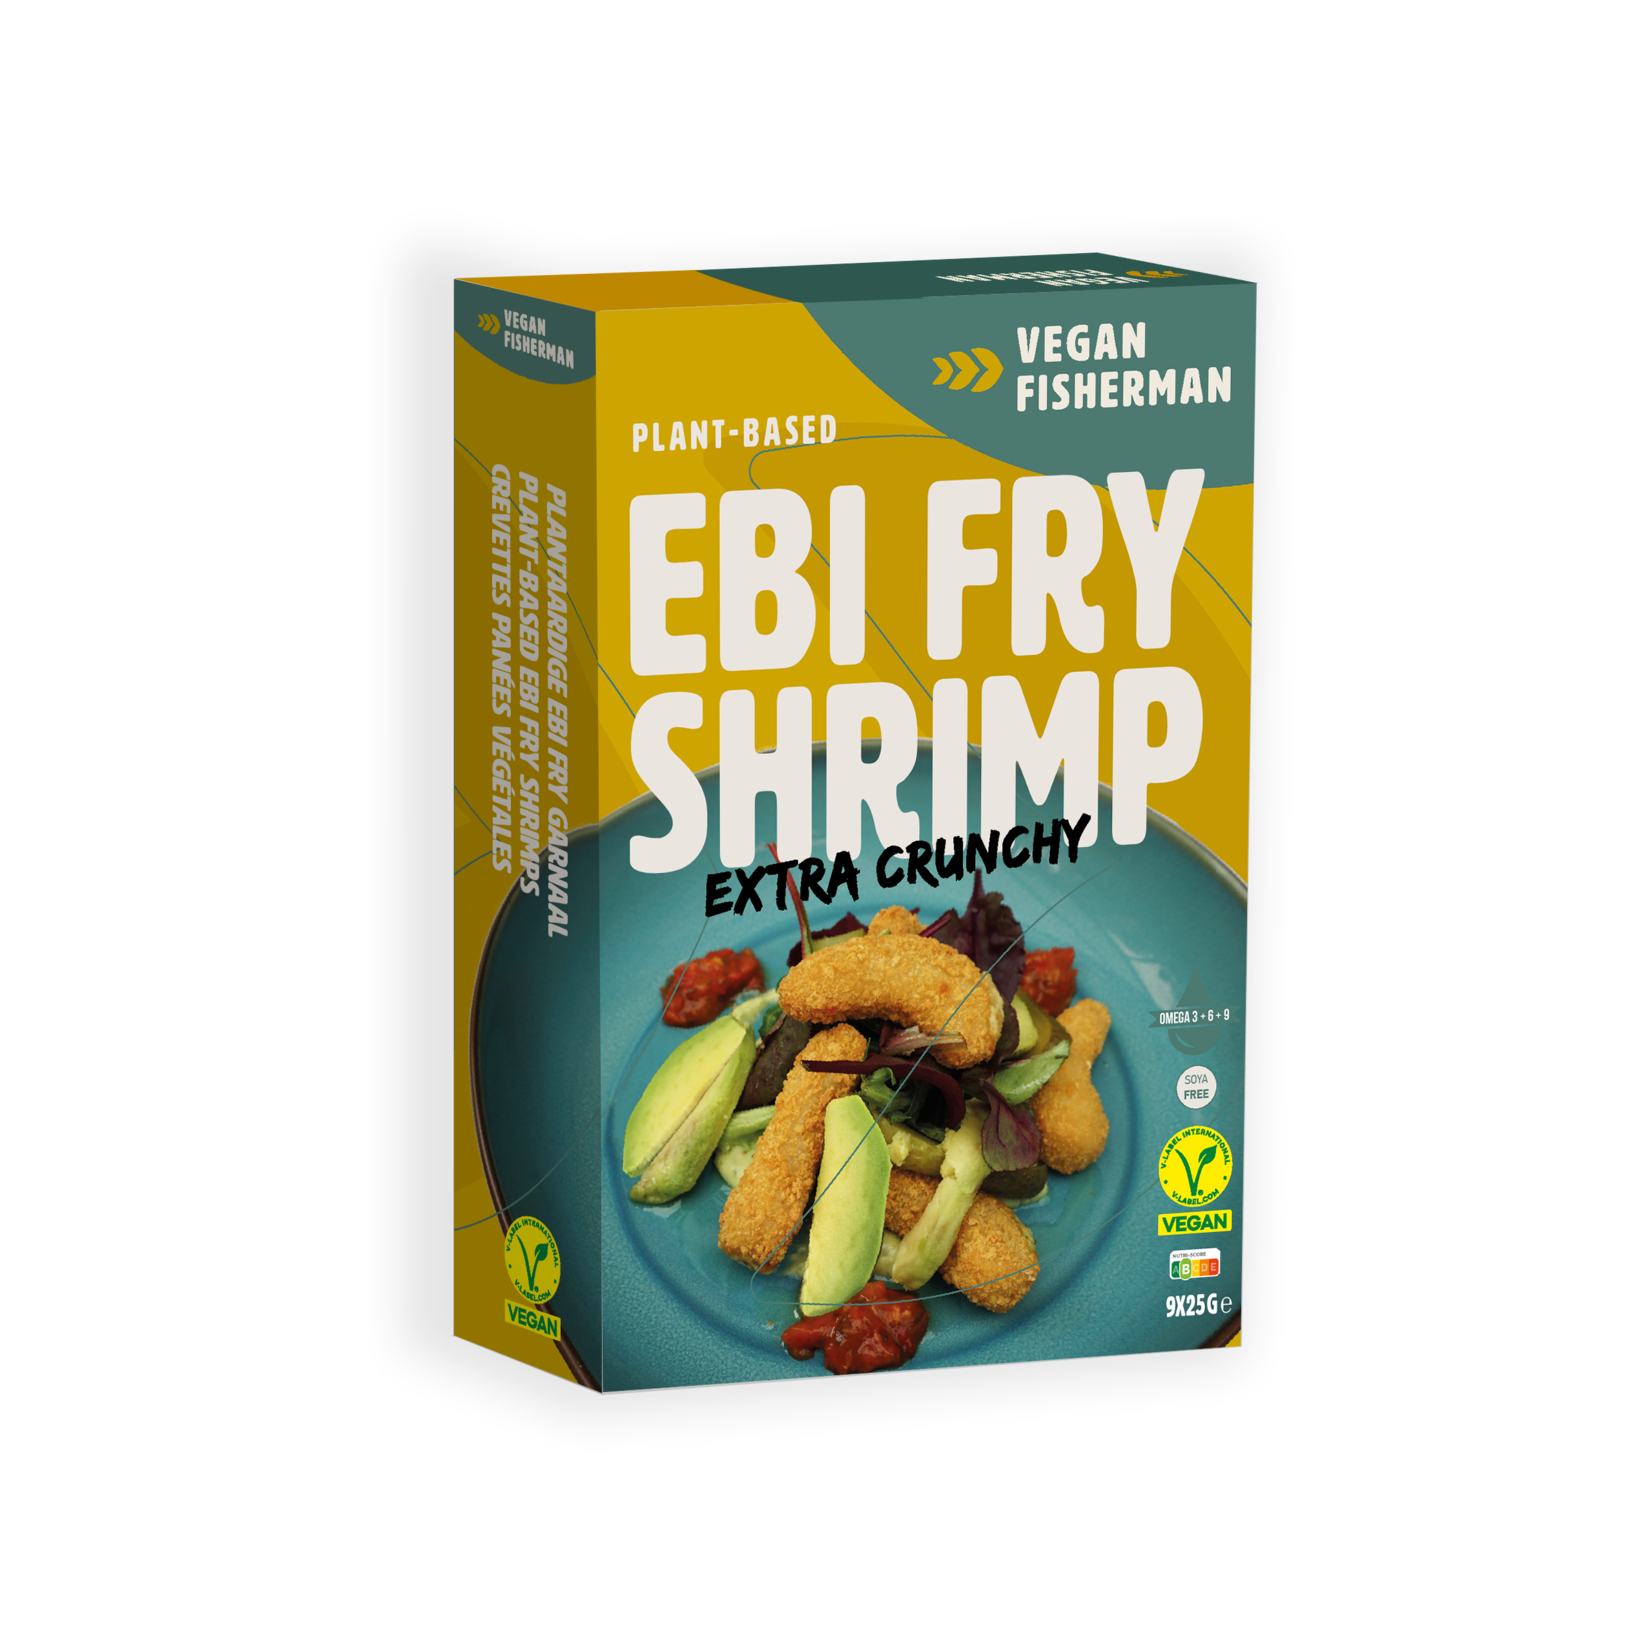 Vegan Visboer - Vegan Fisherman Vegan Fisherman Shrimp | The fish-friendly fish alternative